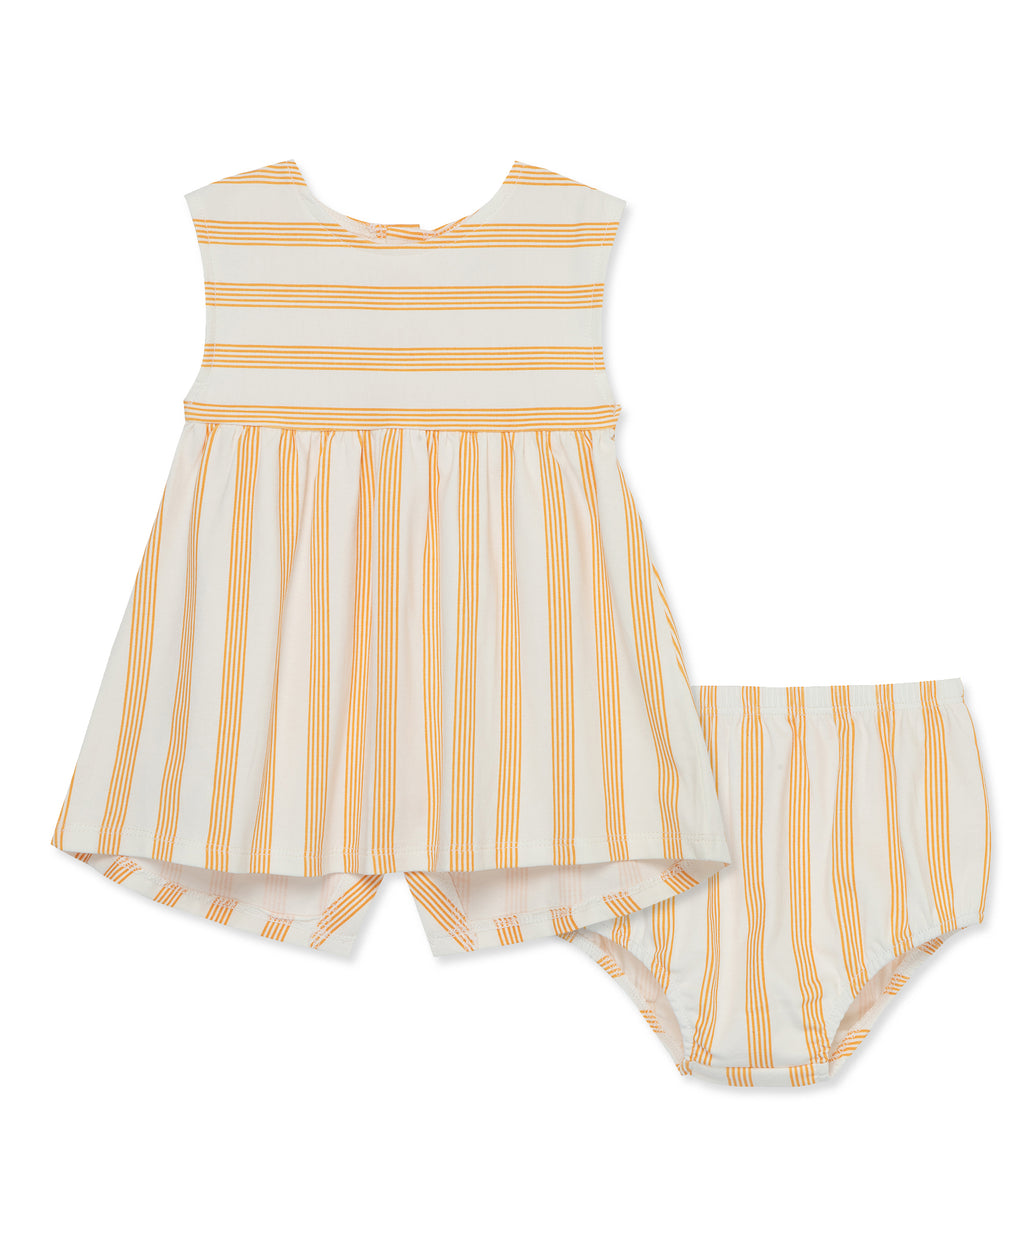 Focus Kids Orange Stripe Dress Set(12M-24M) - Little Me